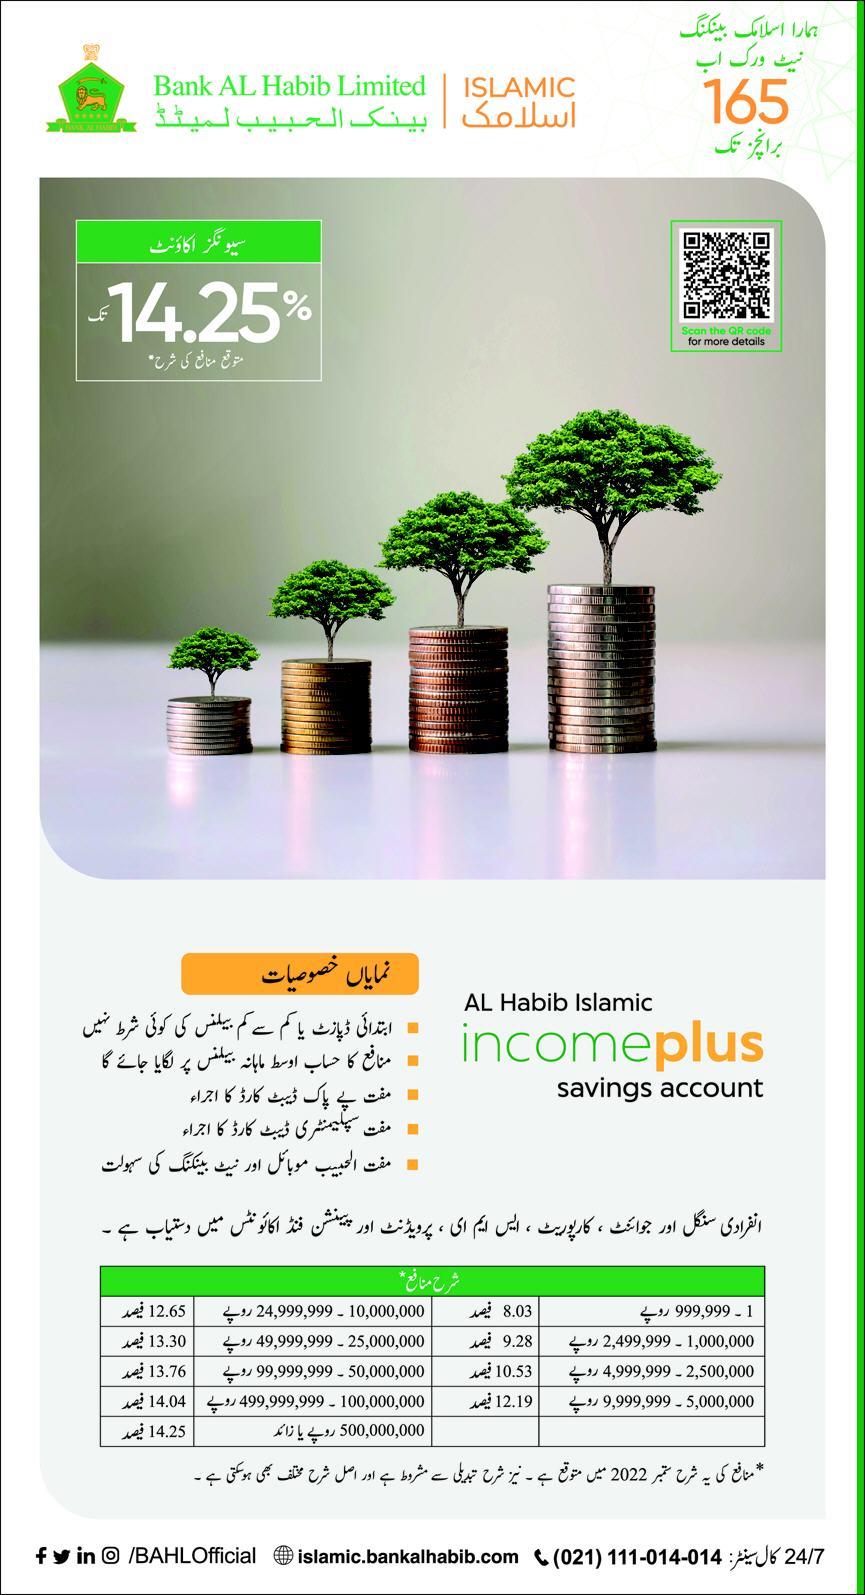 Al Habib Islamic Income Plus Saving Account